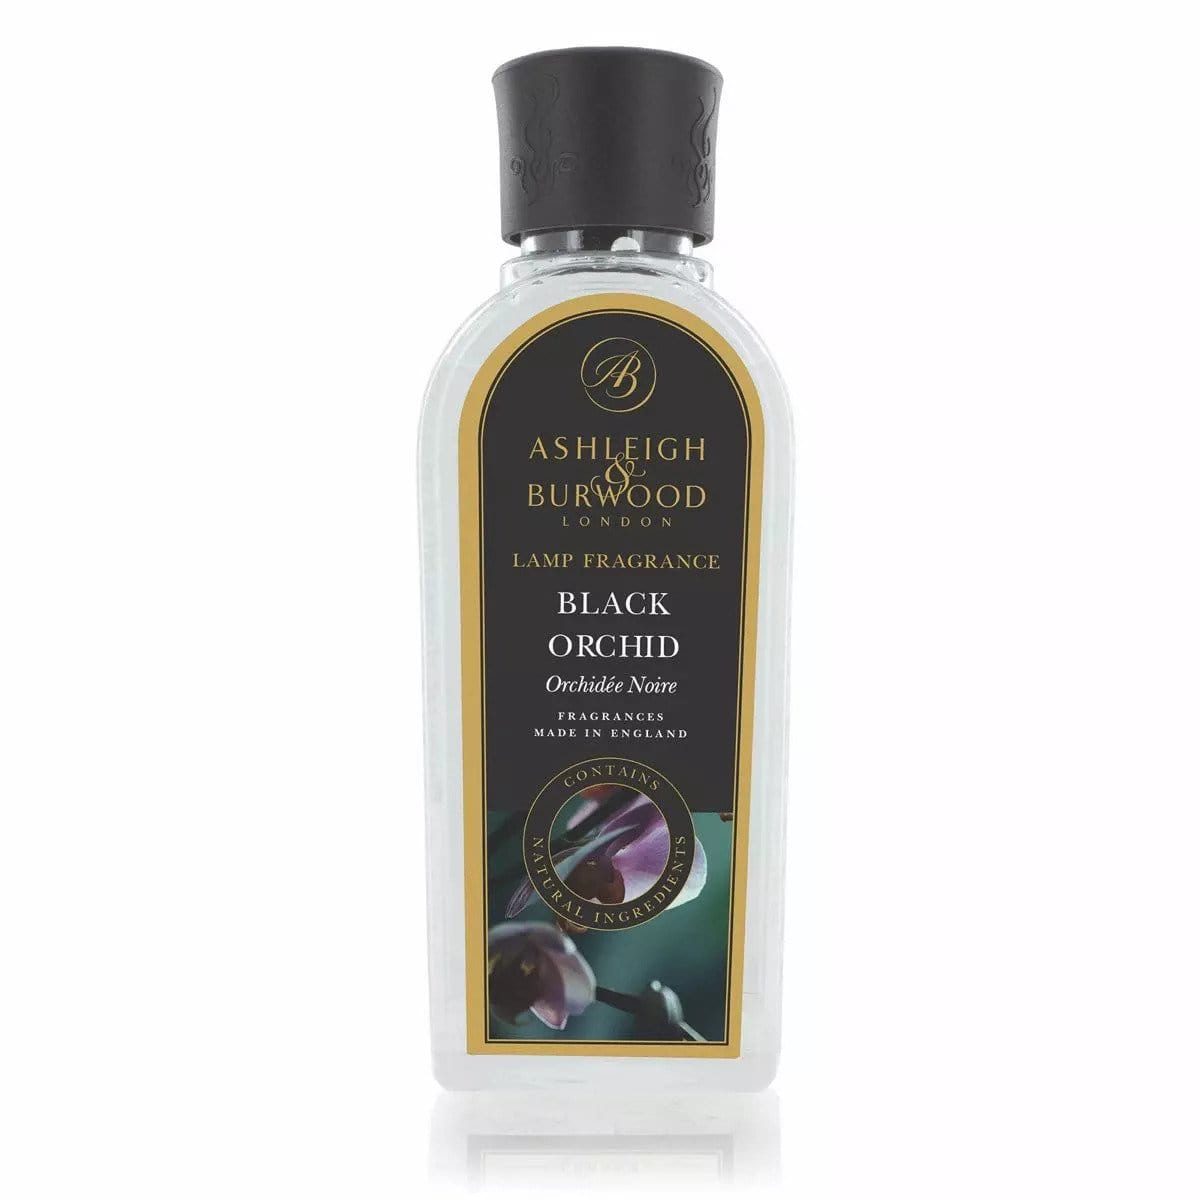 Ashleigh & Burwood Lamp Fragrance Oil 500ml Ashleigh & Burwood Lamp Fragrance - Black Orchid 500ml